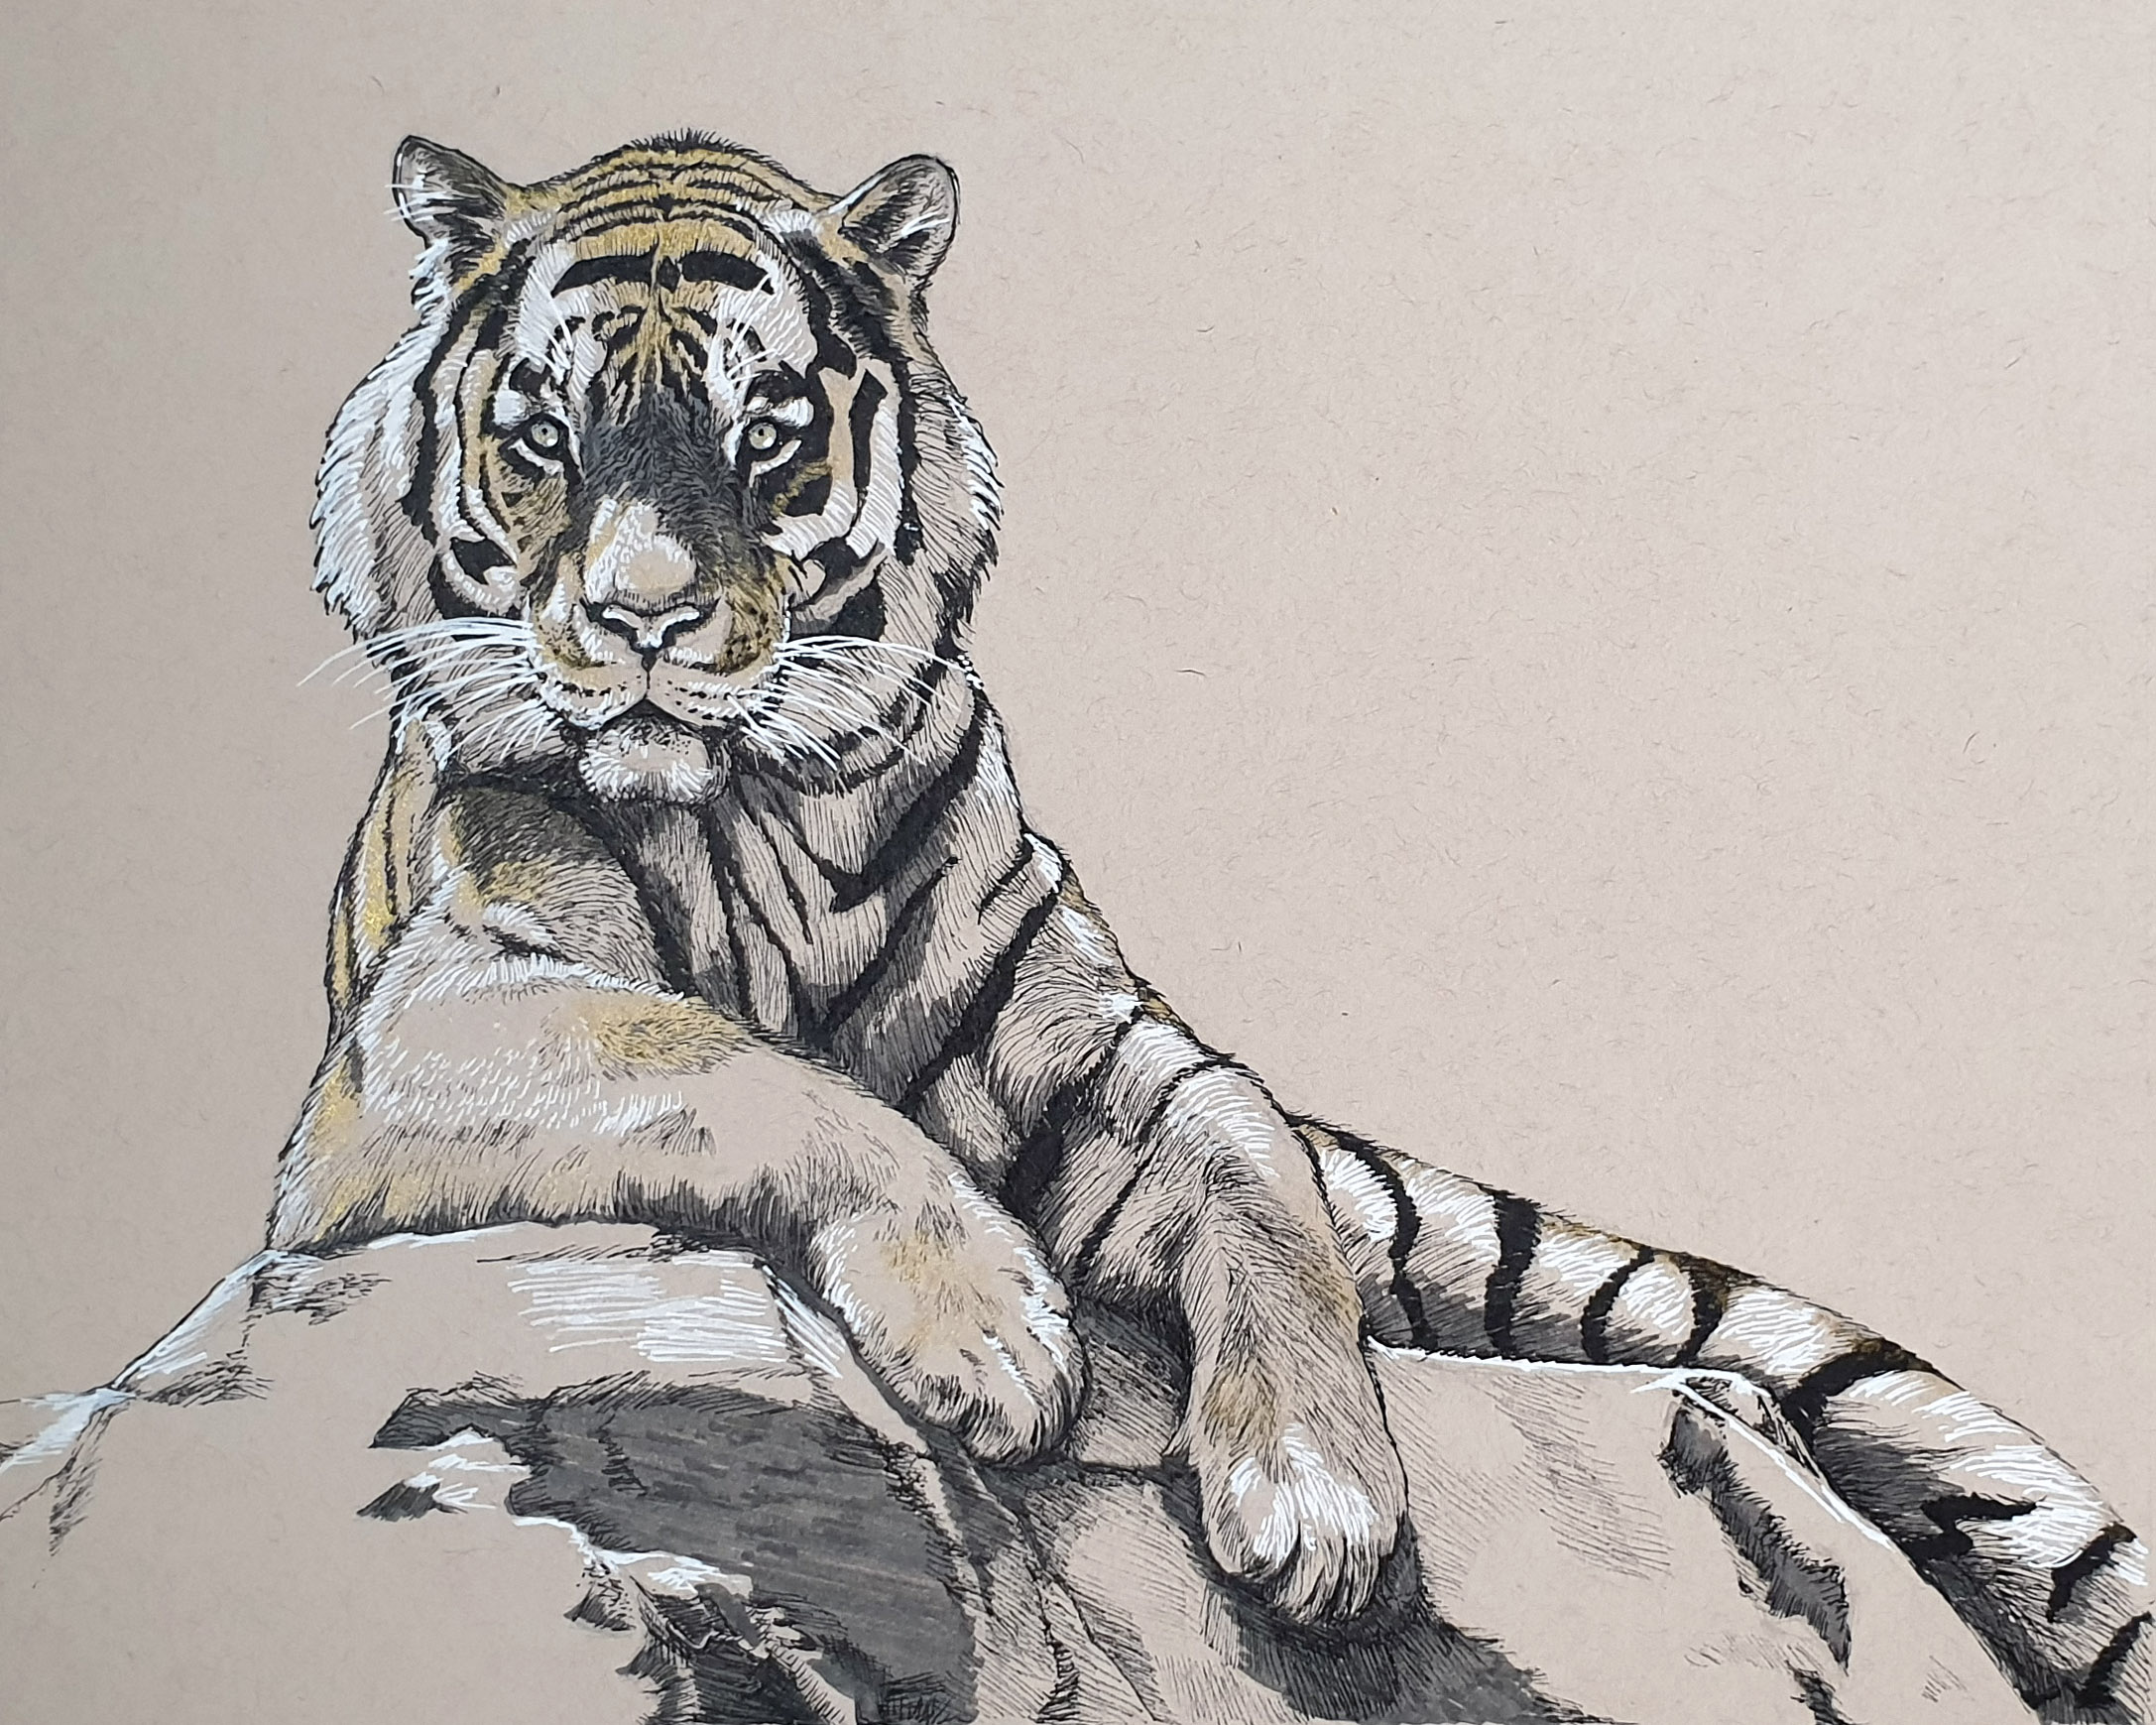 Day 12: Sumatran Tiger